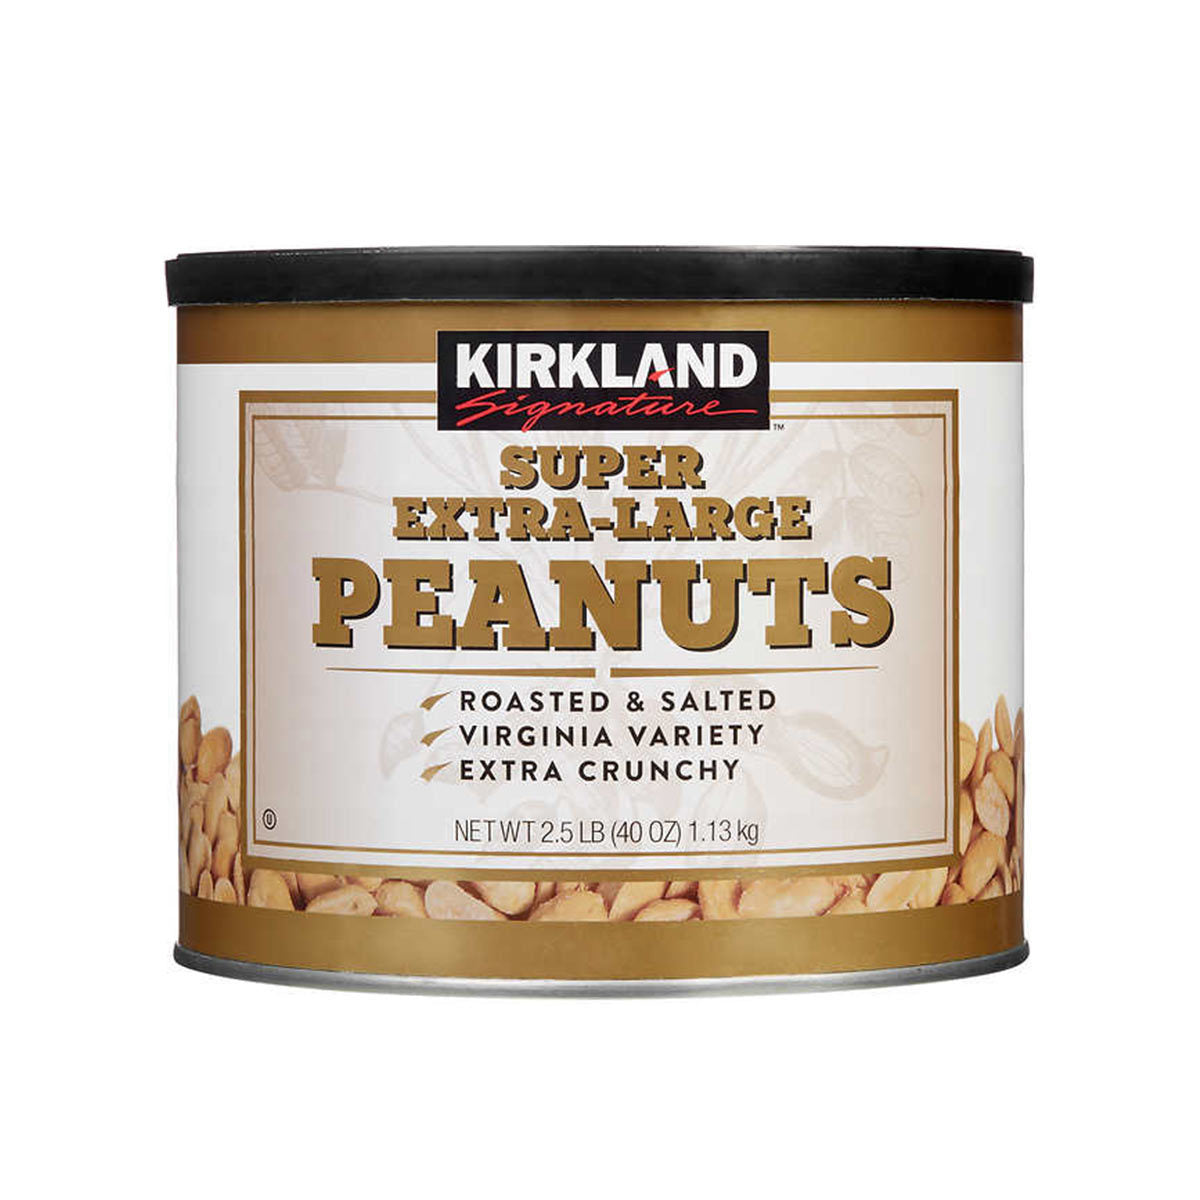 Kirkland Signature Super Extra-Large Roasted & Salted Peanuts, 1.13kg Healthy Snacks Costco UK weight  